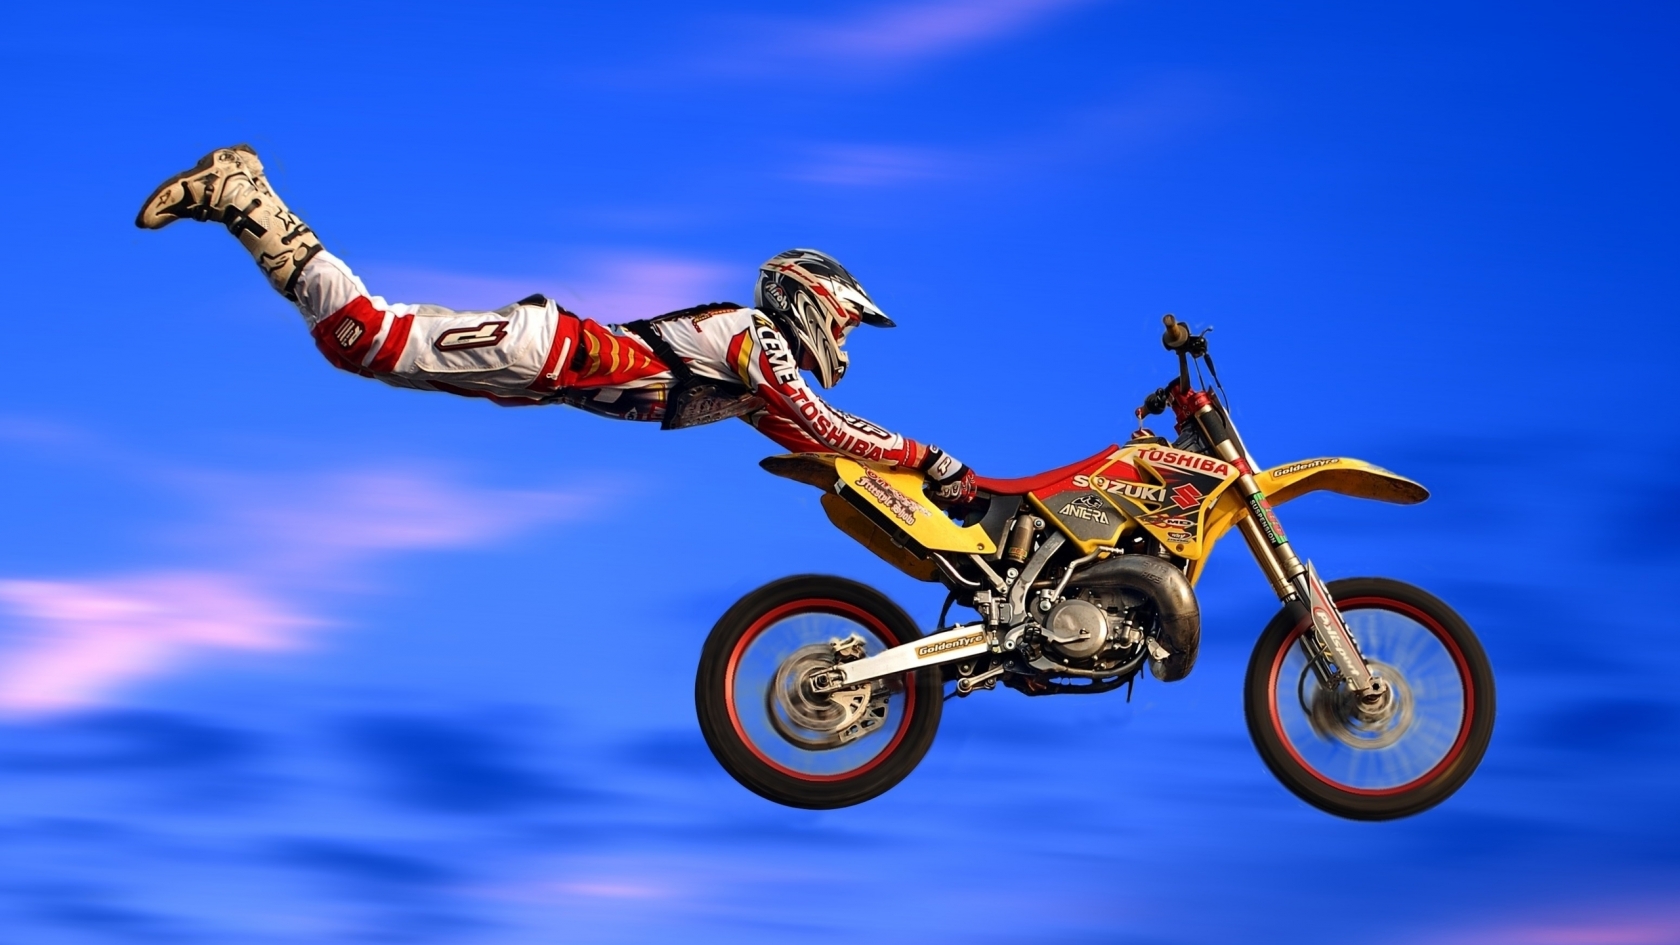 Moto Acrobatic Figure for 1680 x 945 HDTV resolution